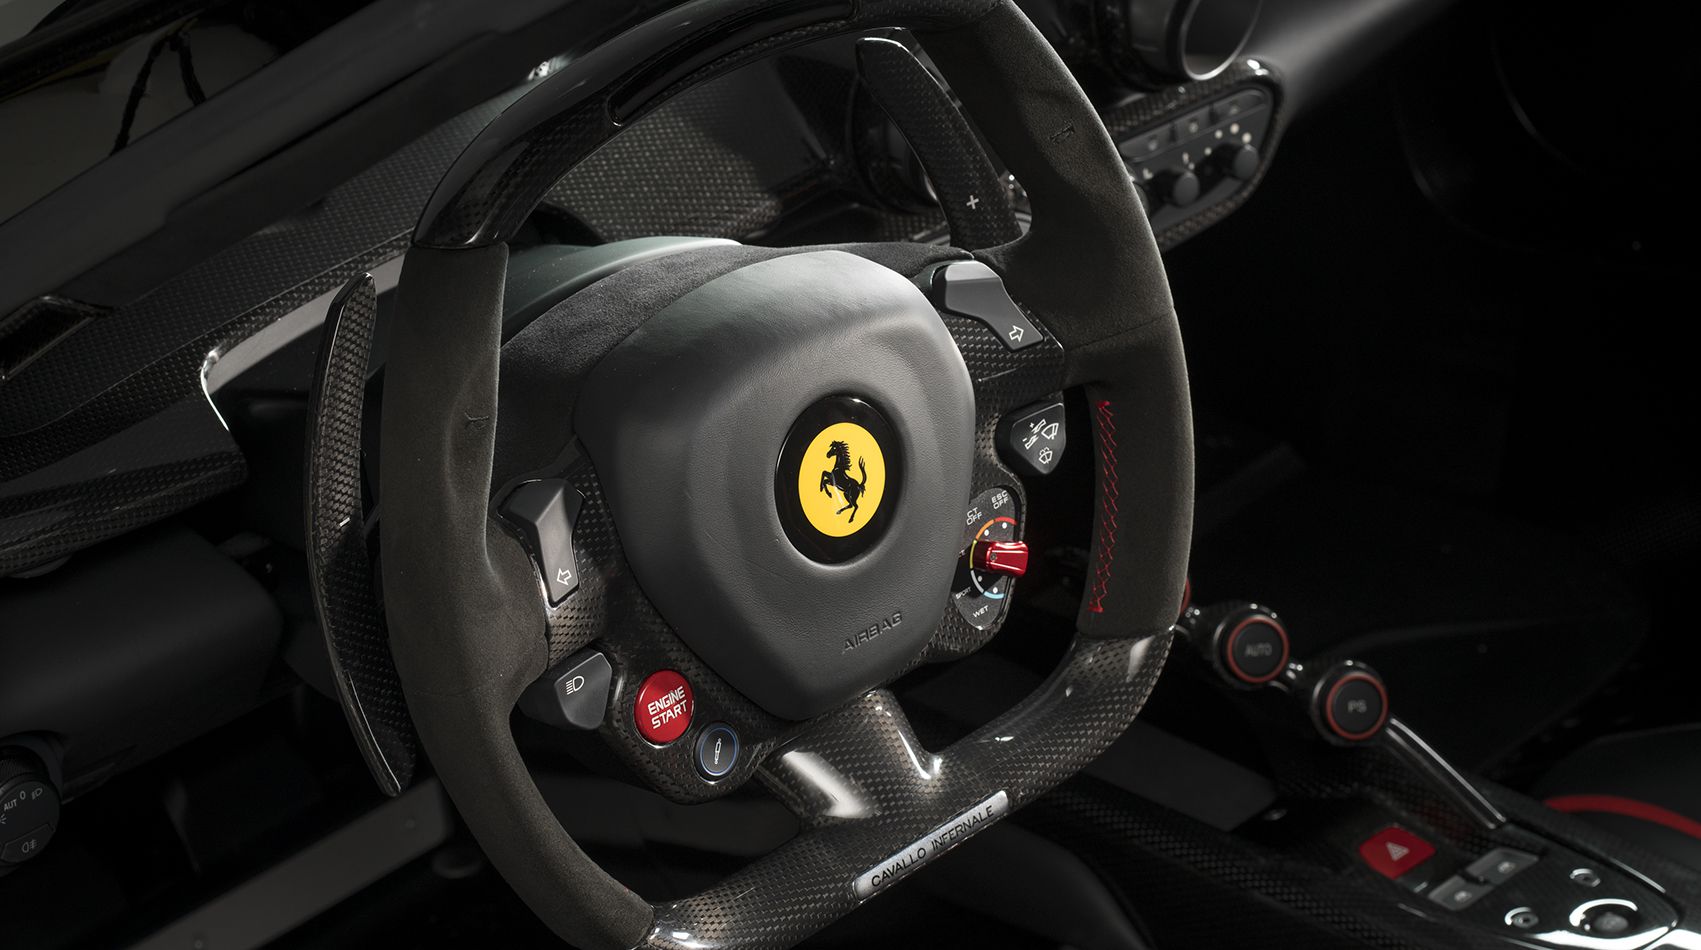 Ferrari LaFerrari for Sale - How Much Will This Ferrari Cost at